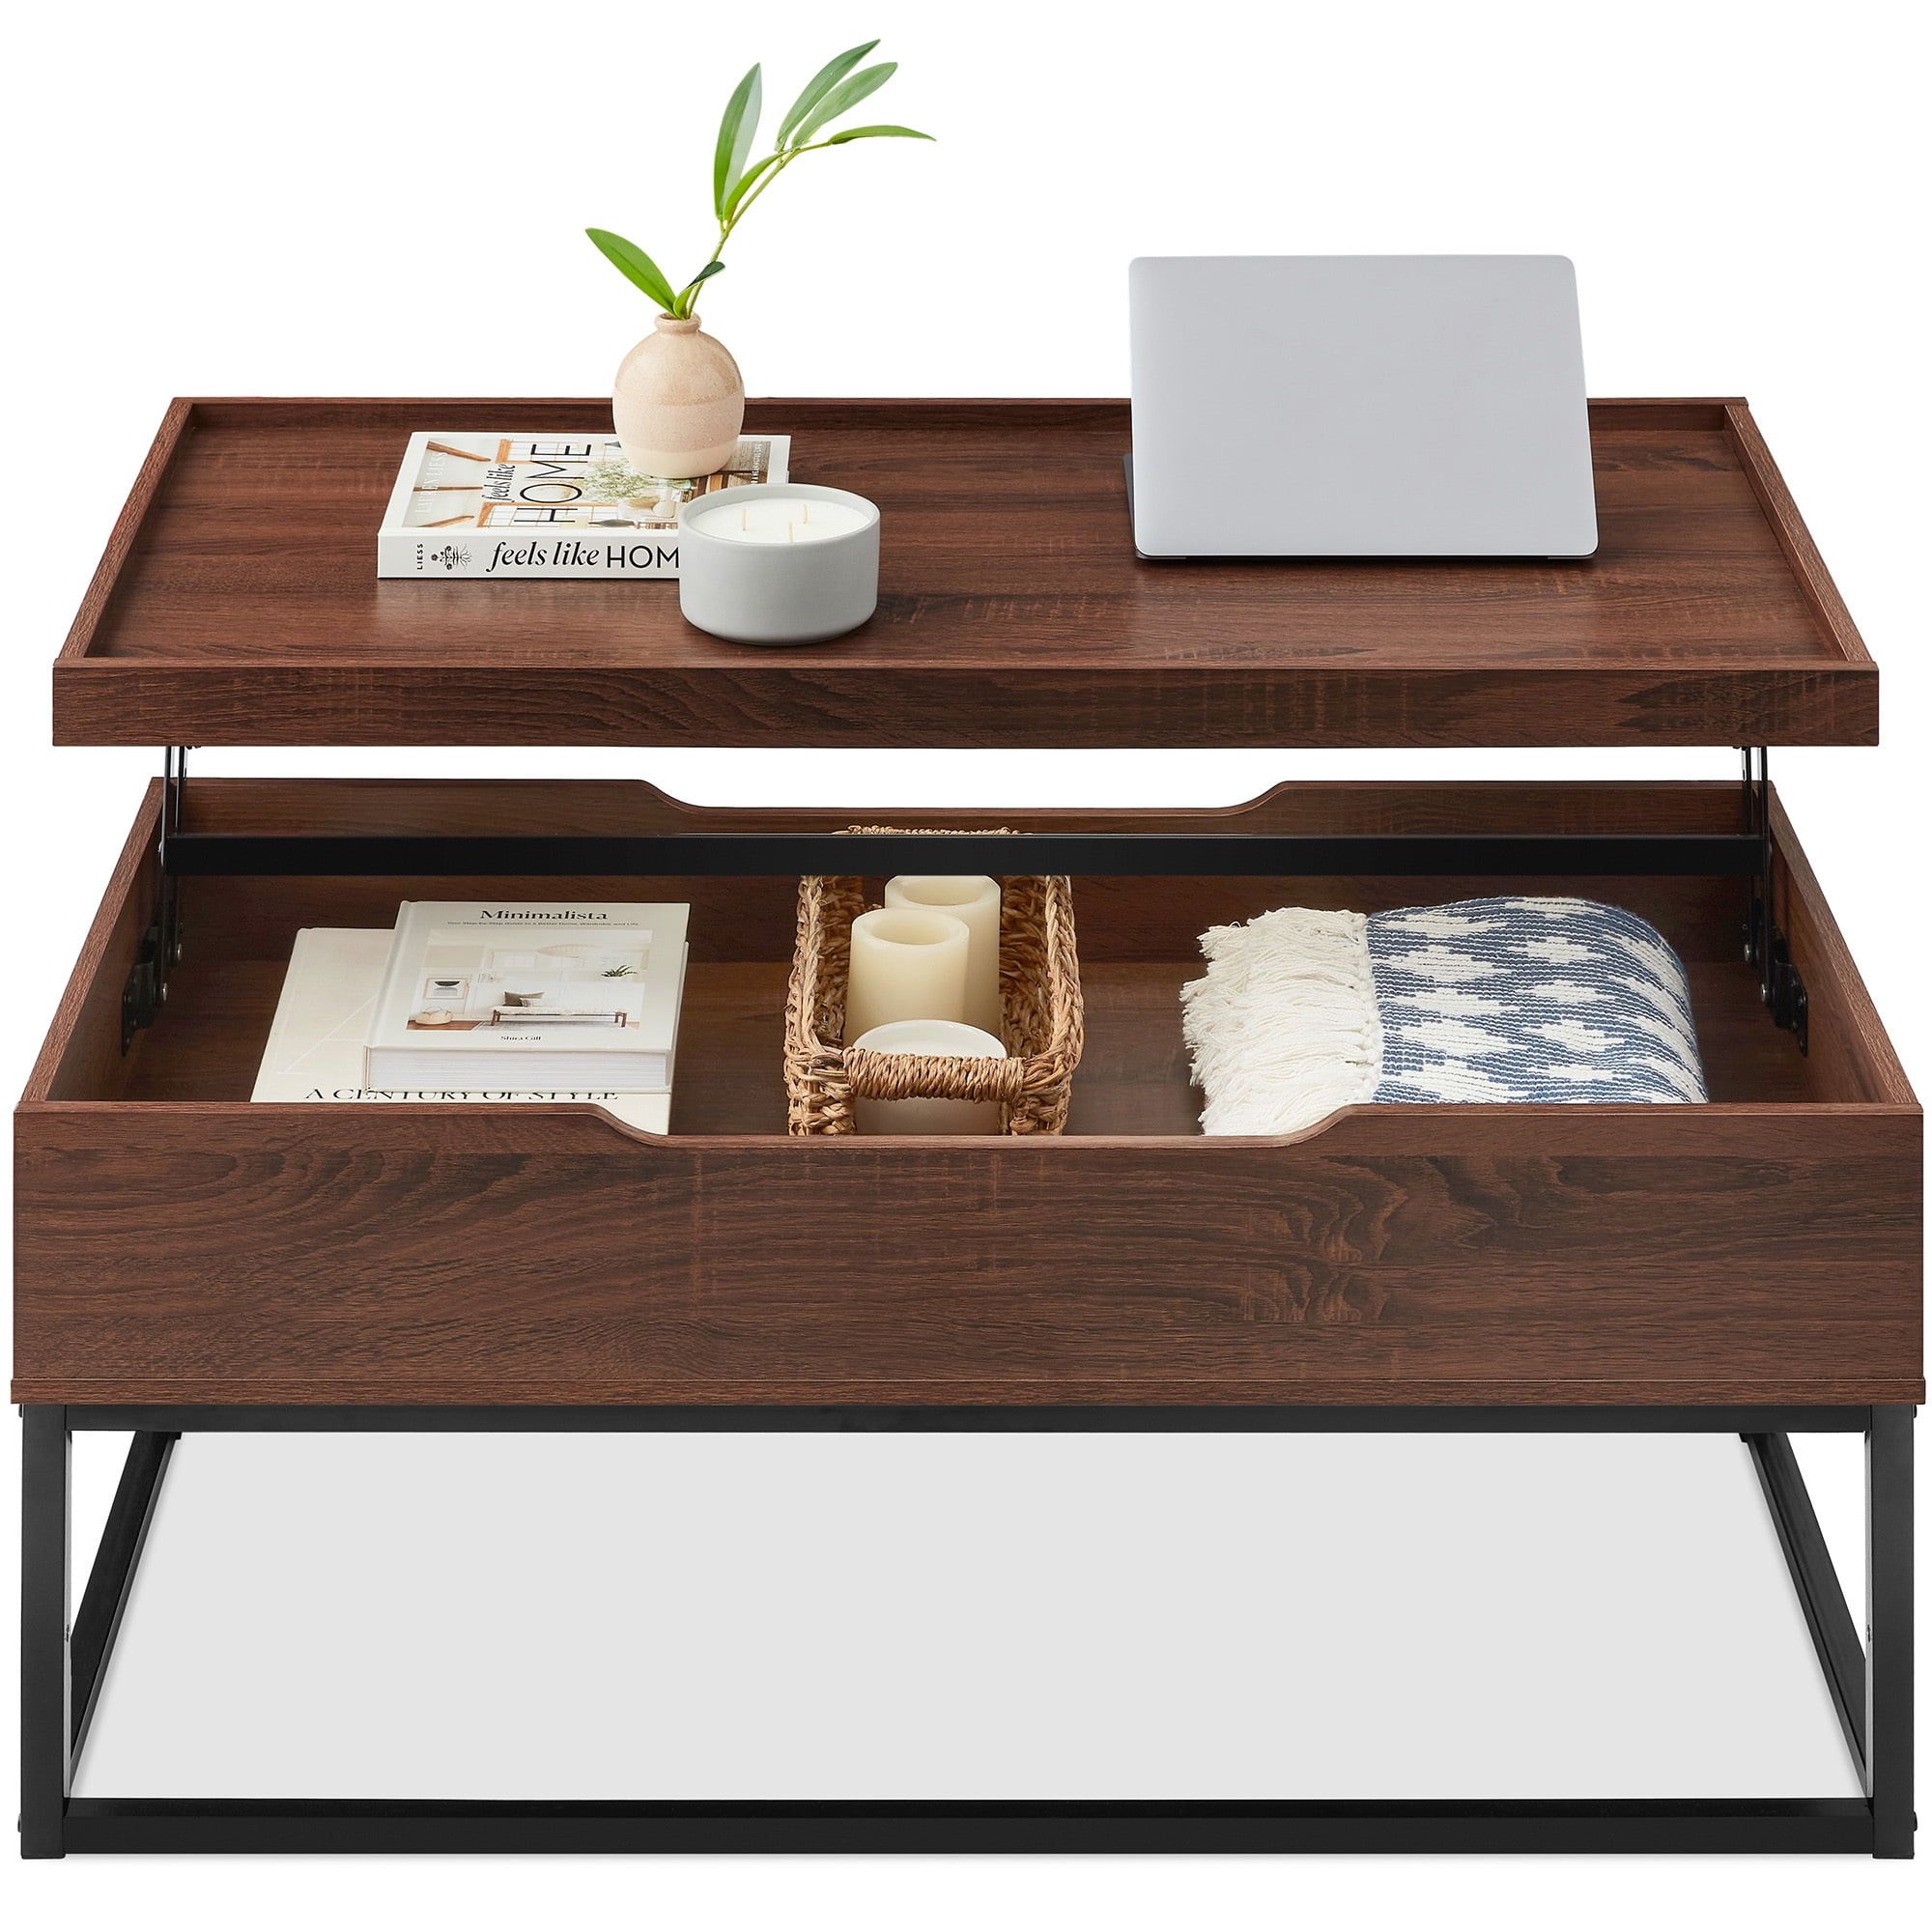 Pemberly Row Replicated Wood Coffee Table In Charcoal Finish – Walmart Regarding Pemberly Row Replicated Wood Coffee Tables (View 2 of 11)